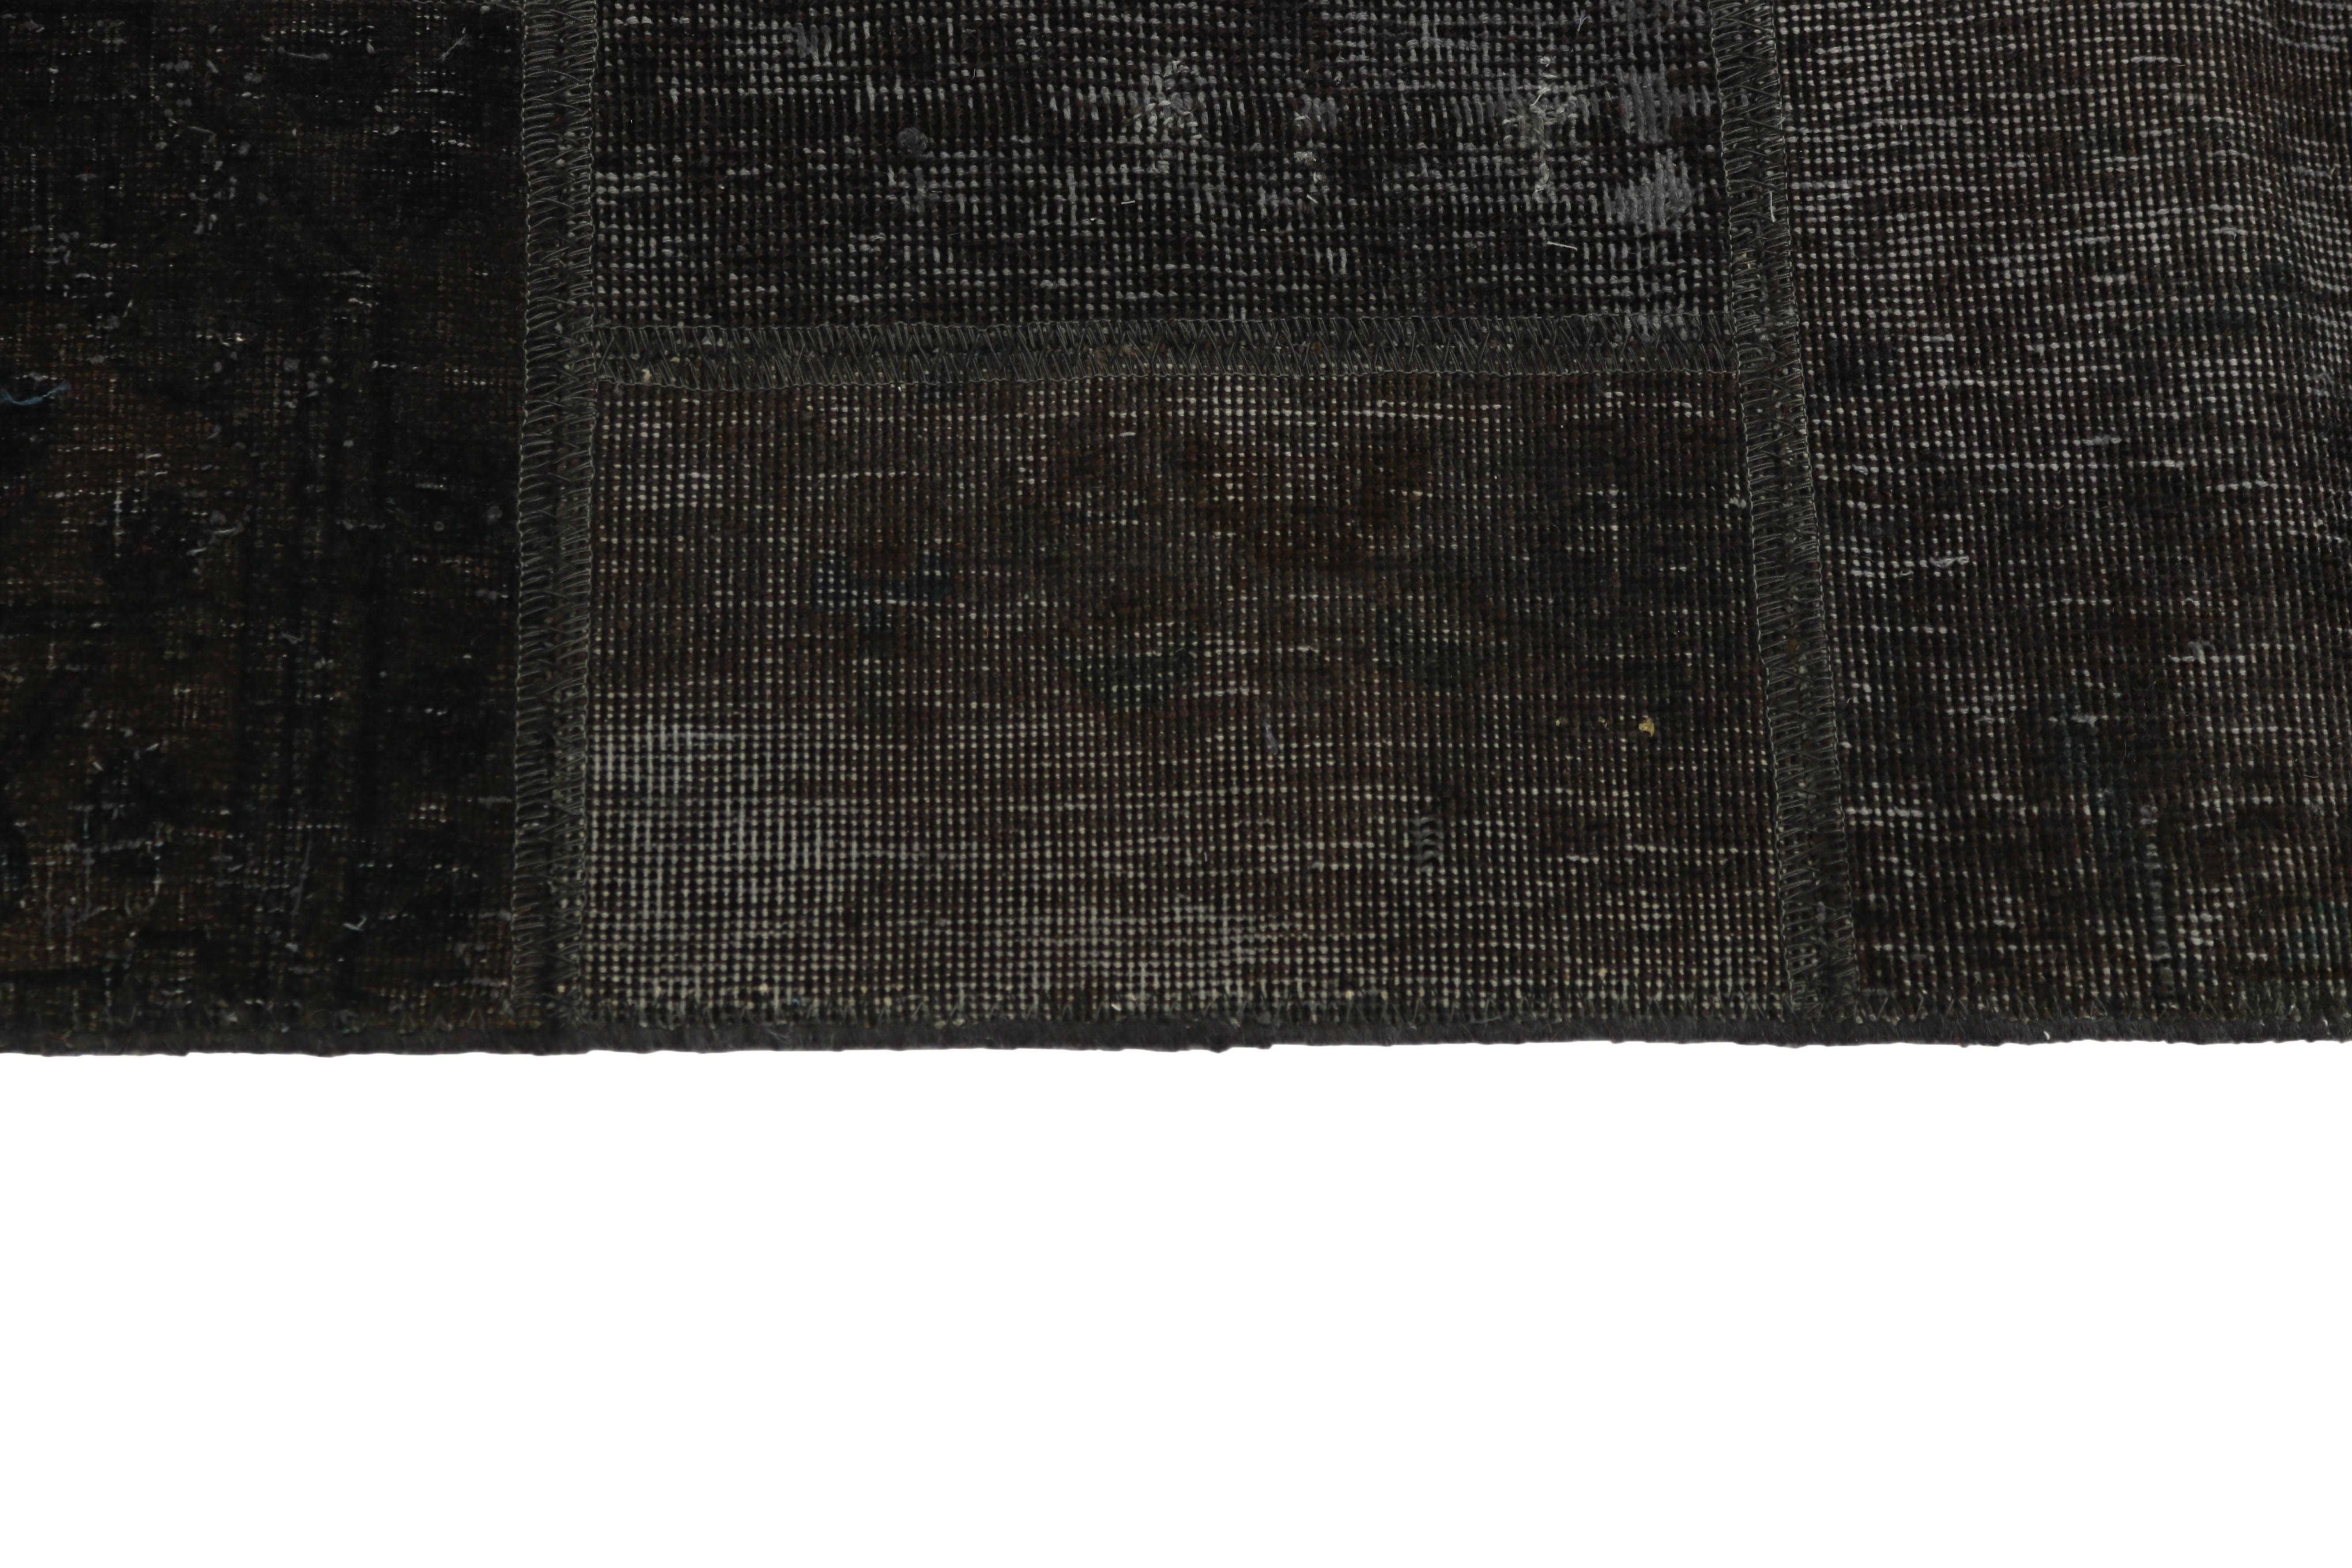 Authentic black patchwork persian rug